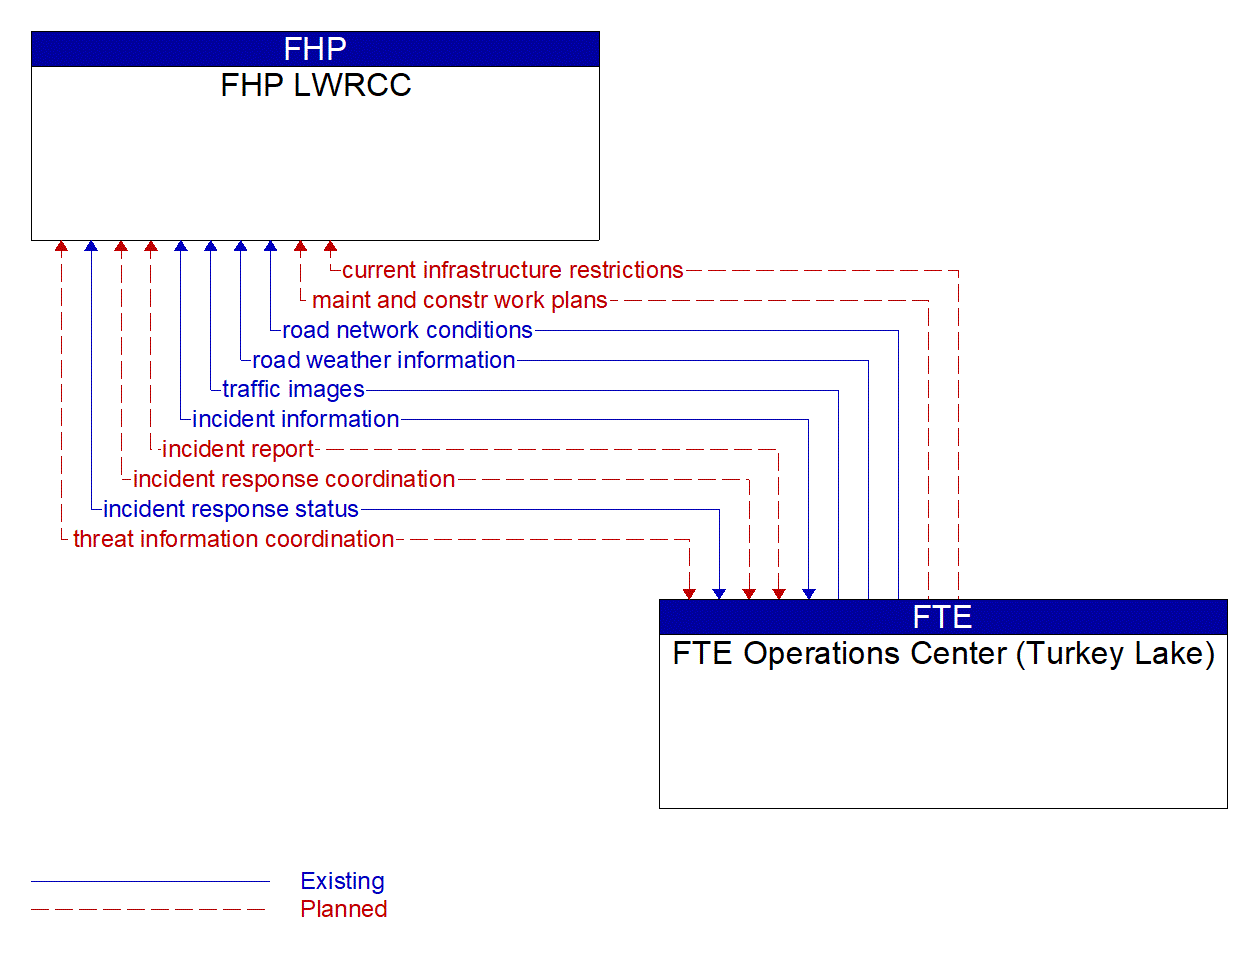 Architecture Flow Diagram: FTE Operations Center (Turkey Lake) <--> FHP LWRCC